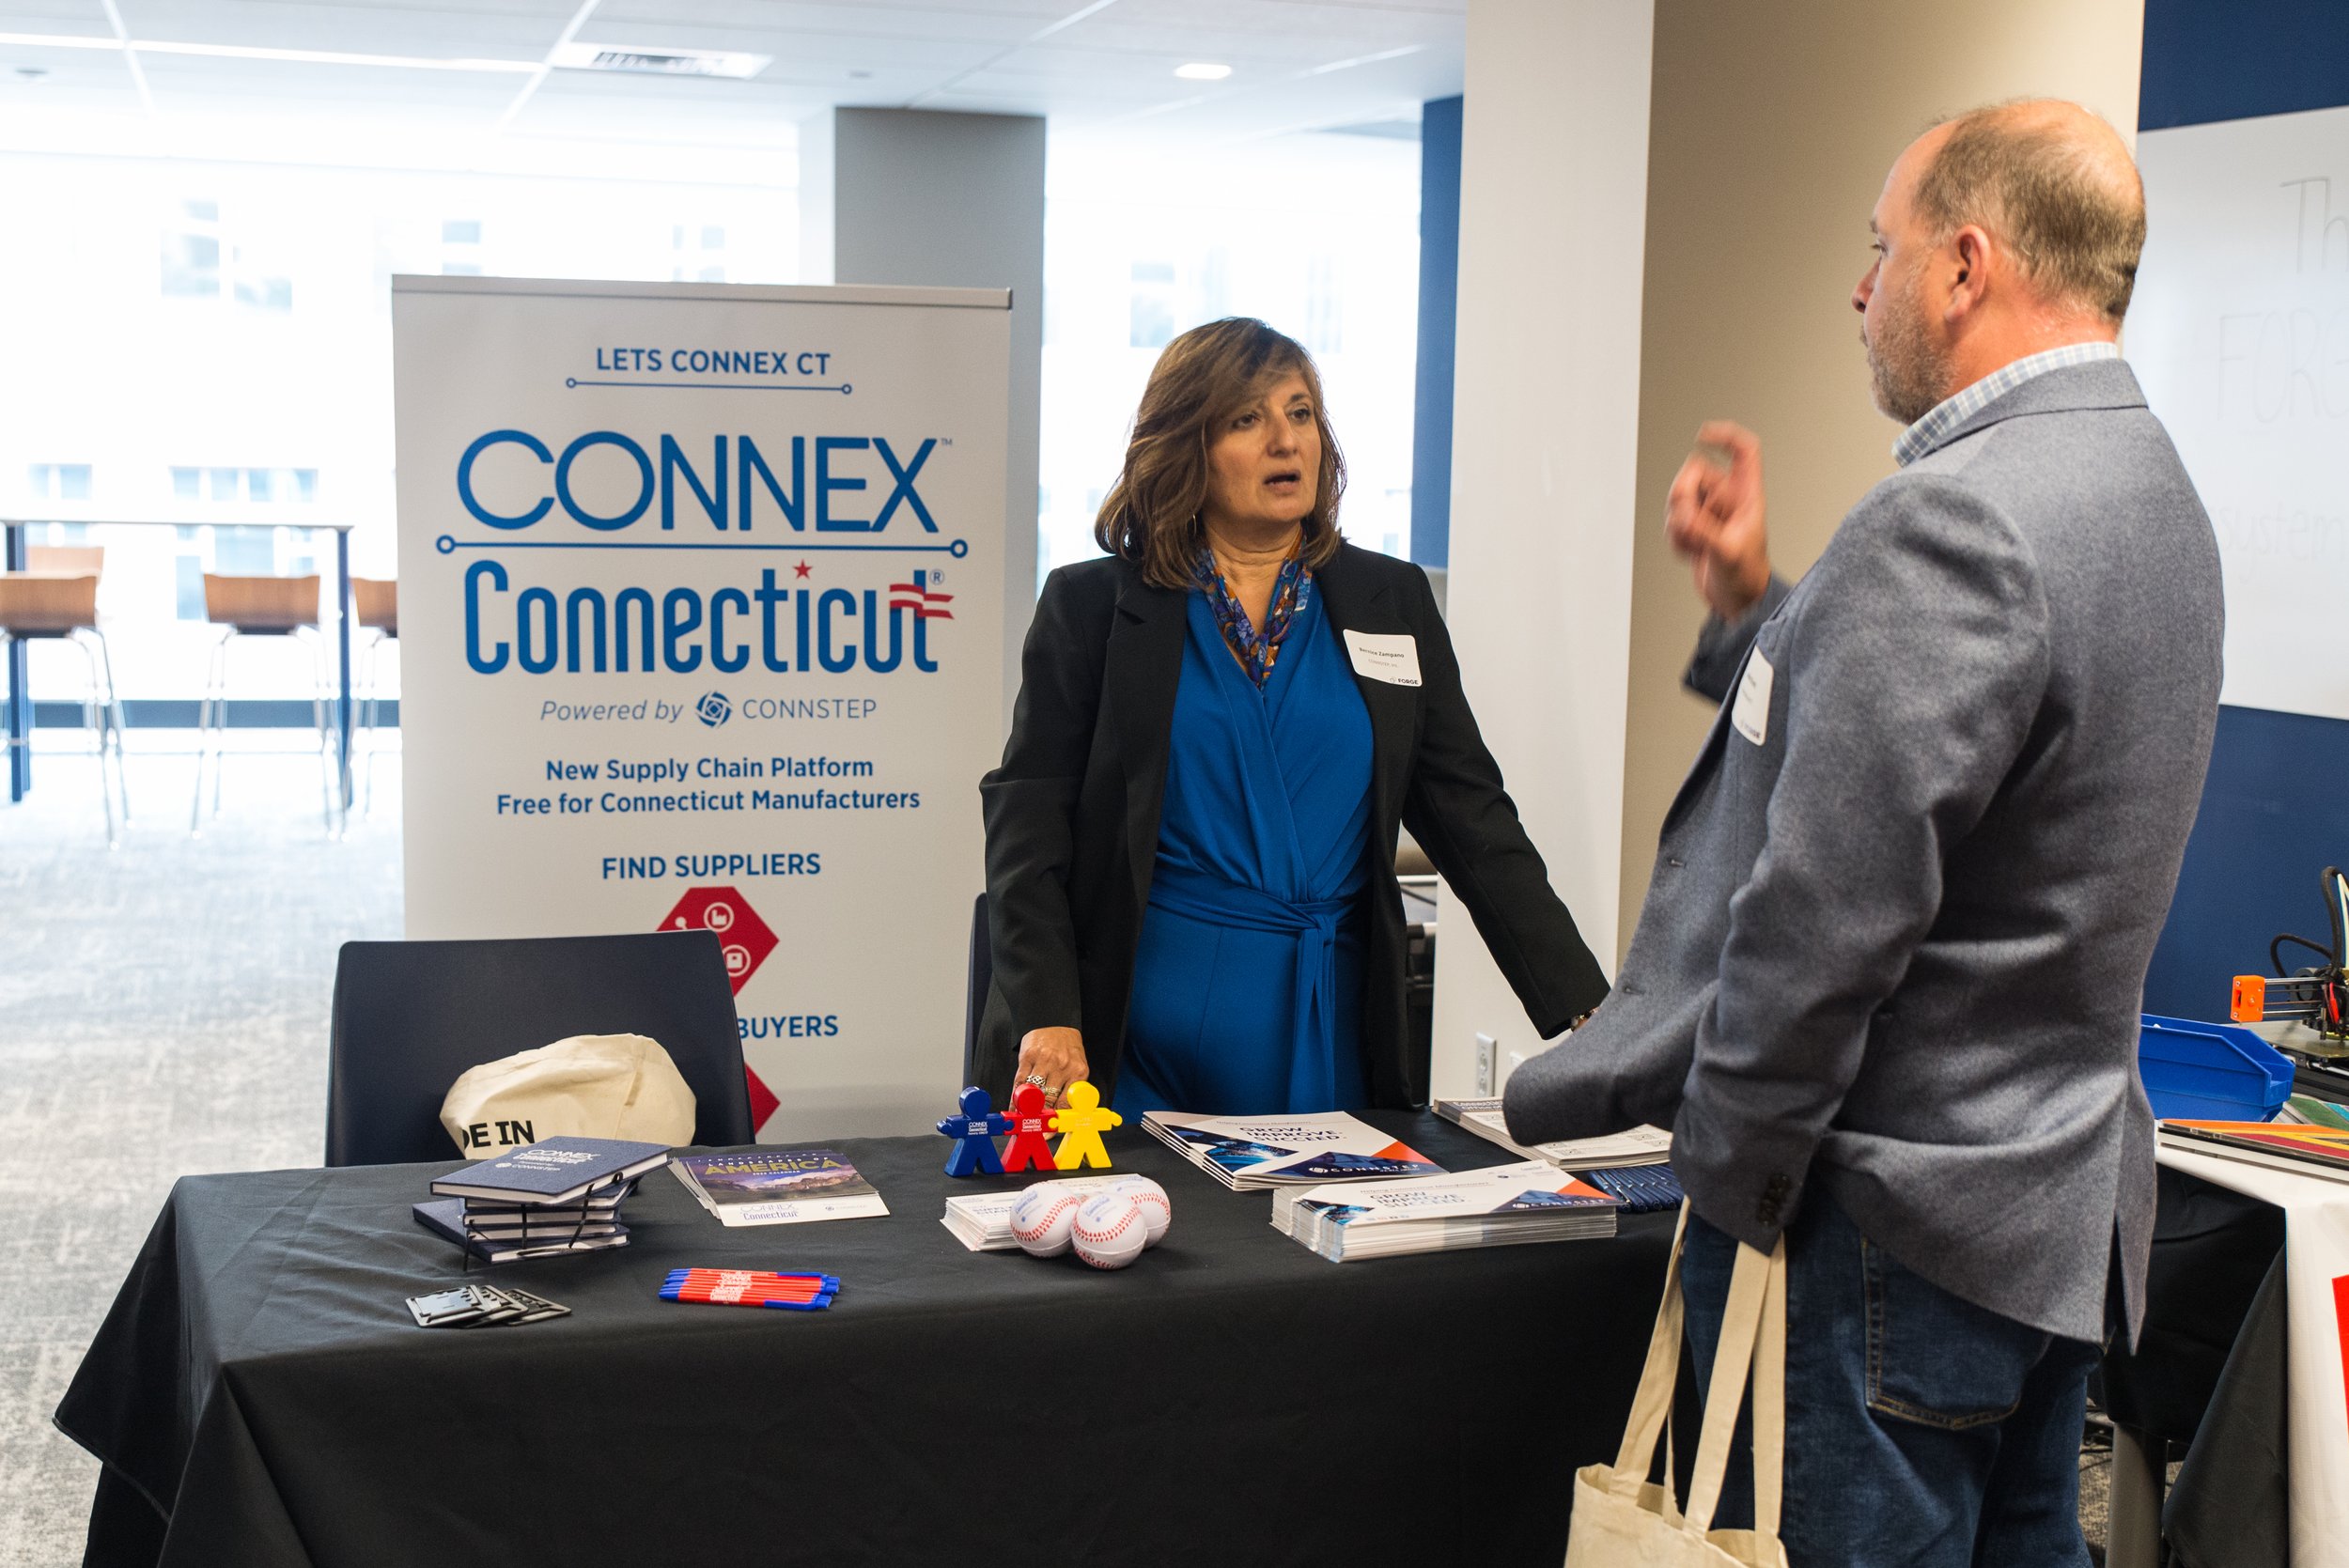  Bernice Zampano tells an attendee about CONNEX Connecticut  